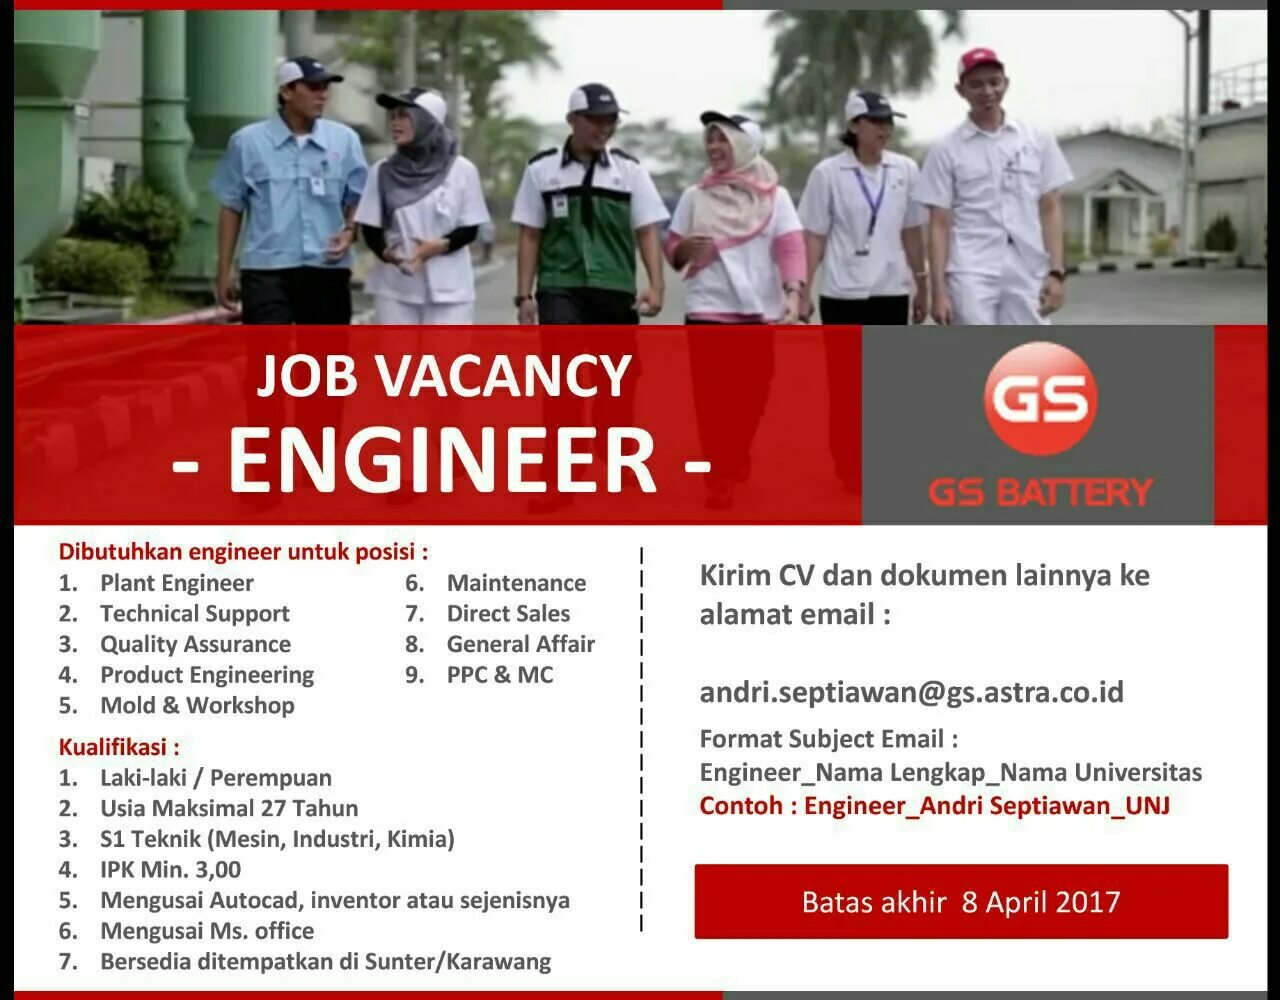 Job vacancy. Engineering vacancy. Job vacancy MC Donald. Single Engineer vacancies.